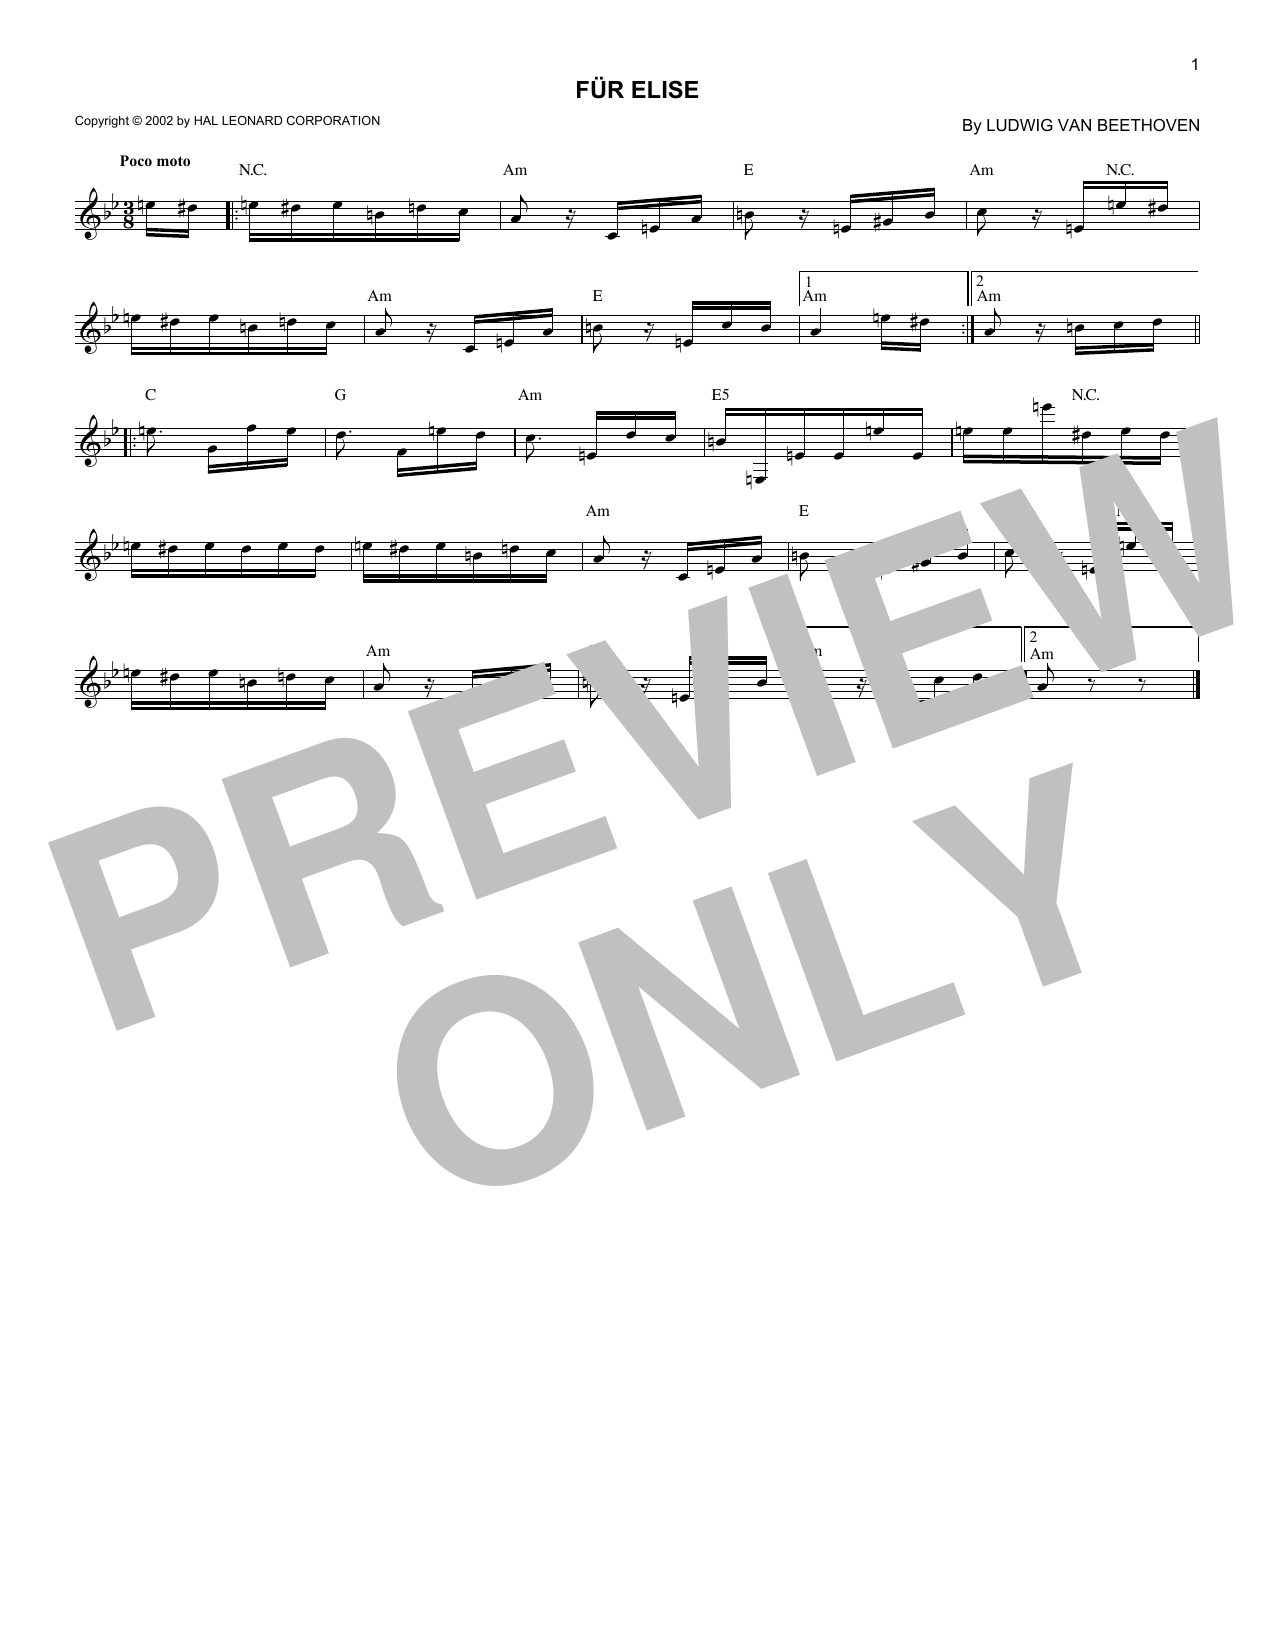 Download Ludwig van Beethoven Fur Elise, WoO 59 Sheet Music and learn how to play Easy Guitar PDF digital score in minutes